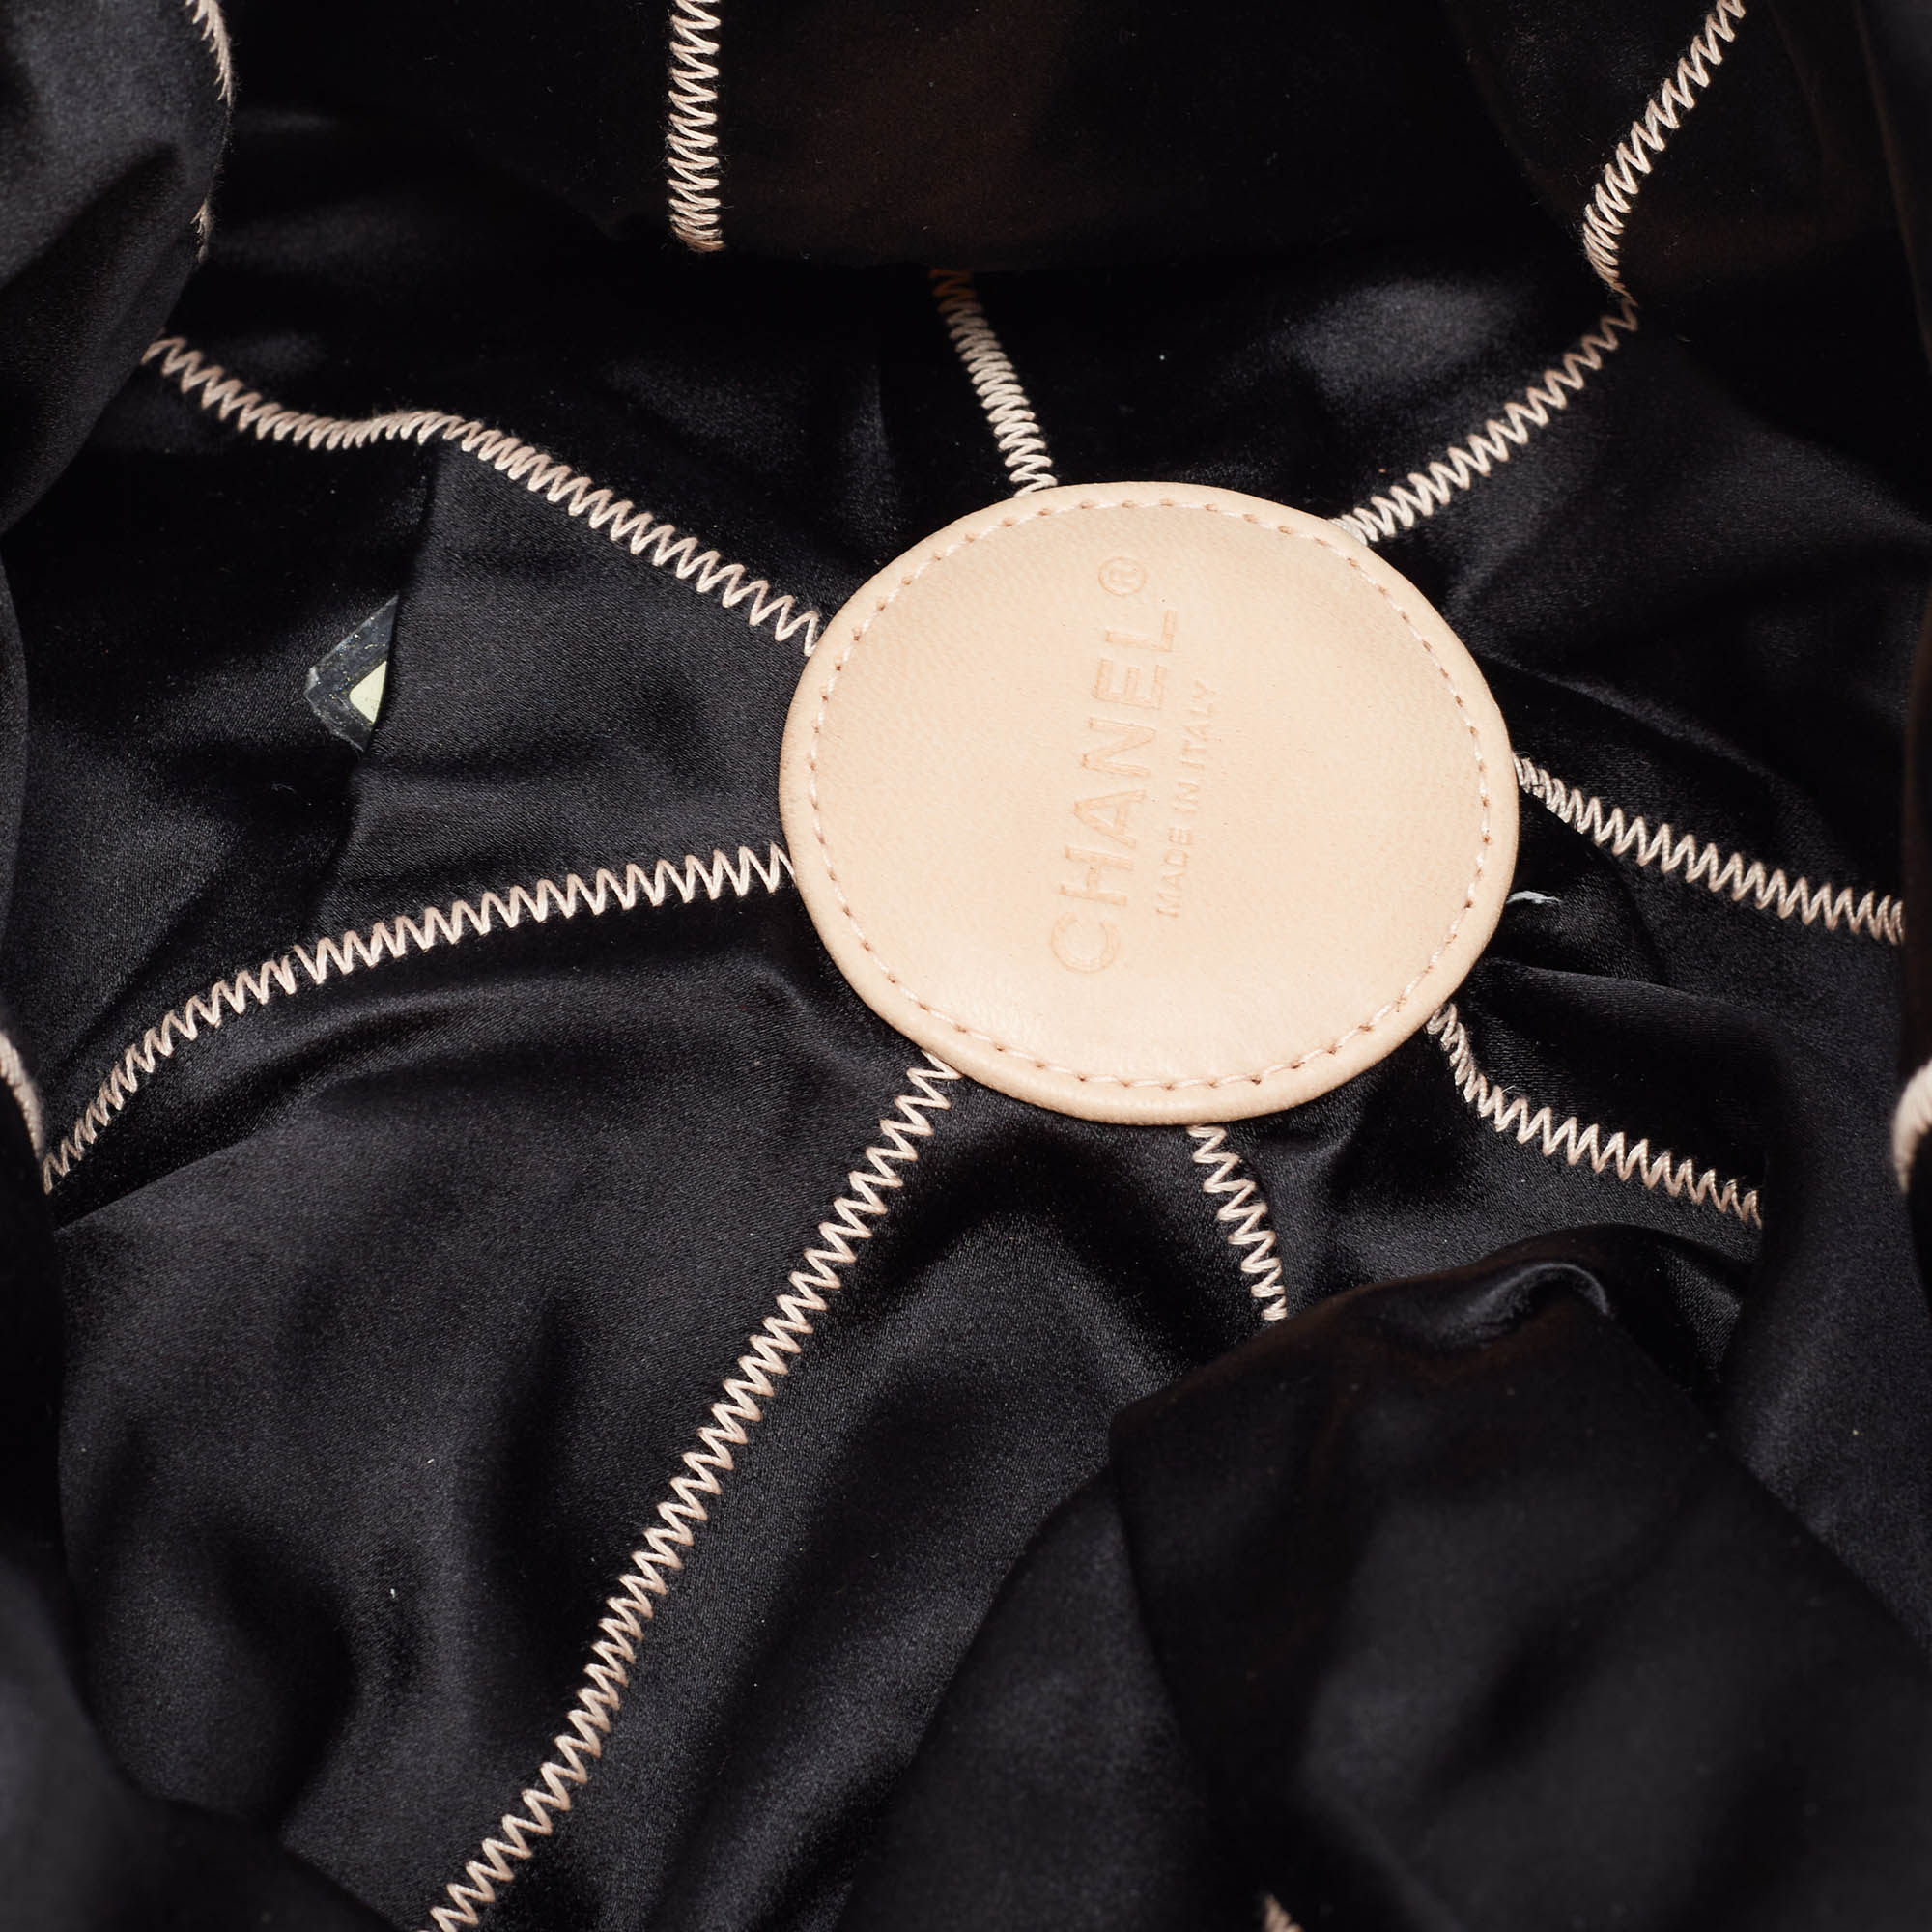 Chanel Peach/Black Leather Reversible Drawstring Tassel Bag